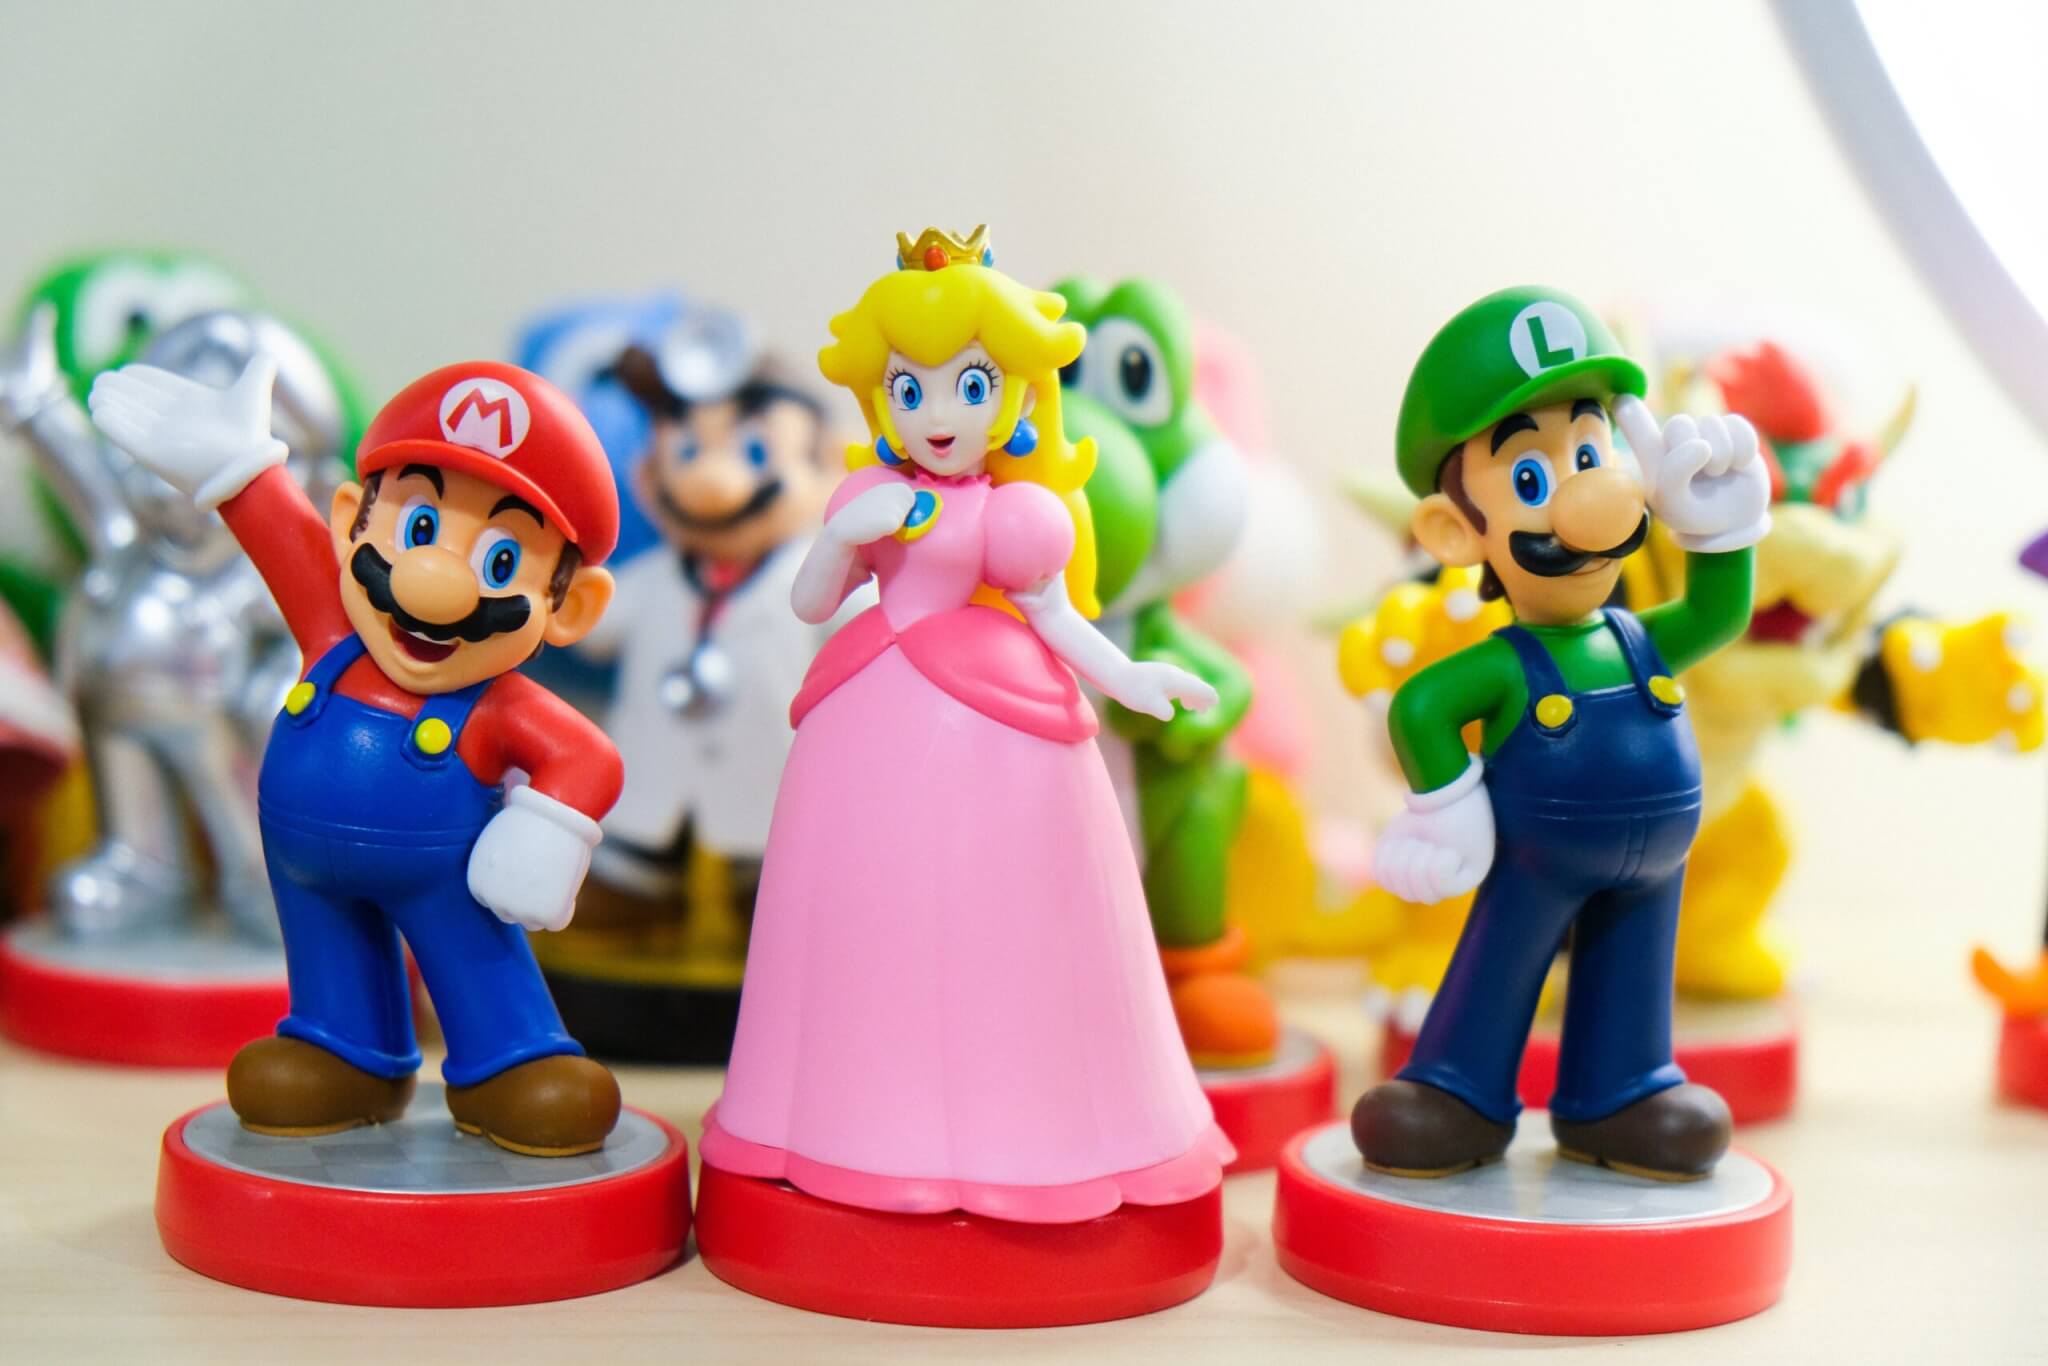 Mario character figurines